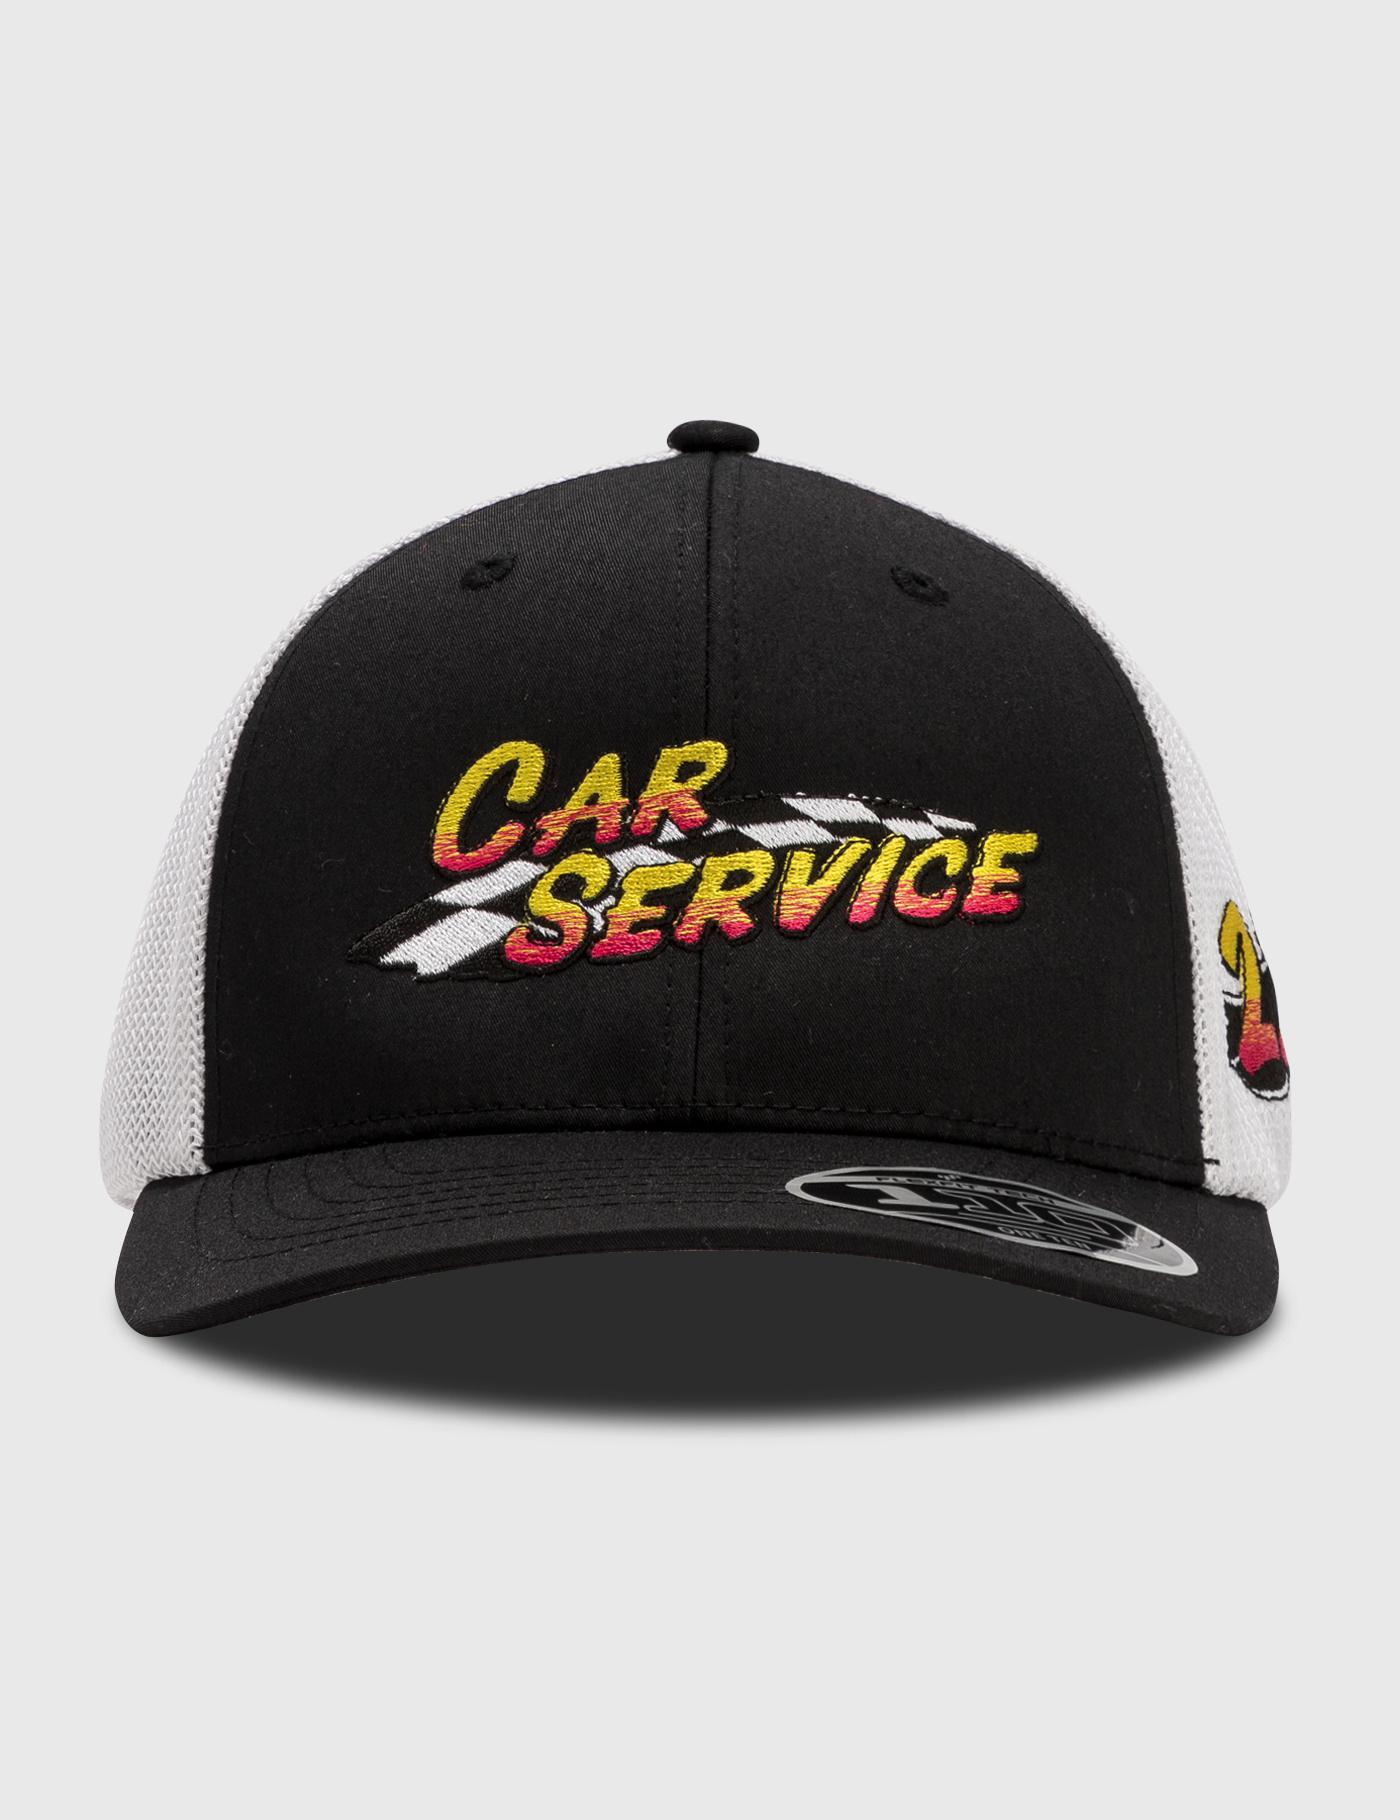 Nascar Mesh cap by CAR SERVICE